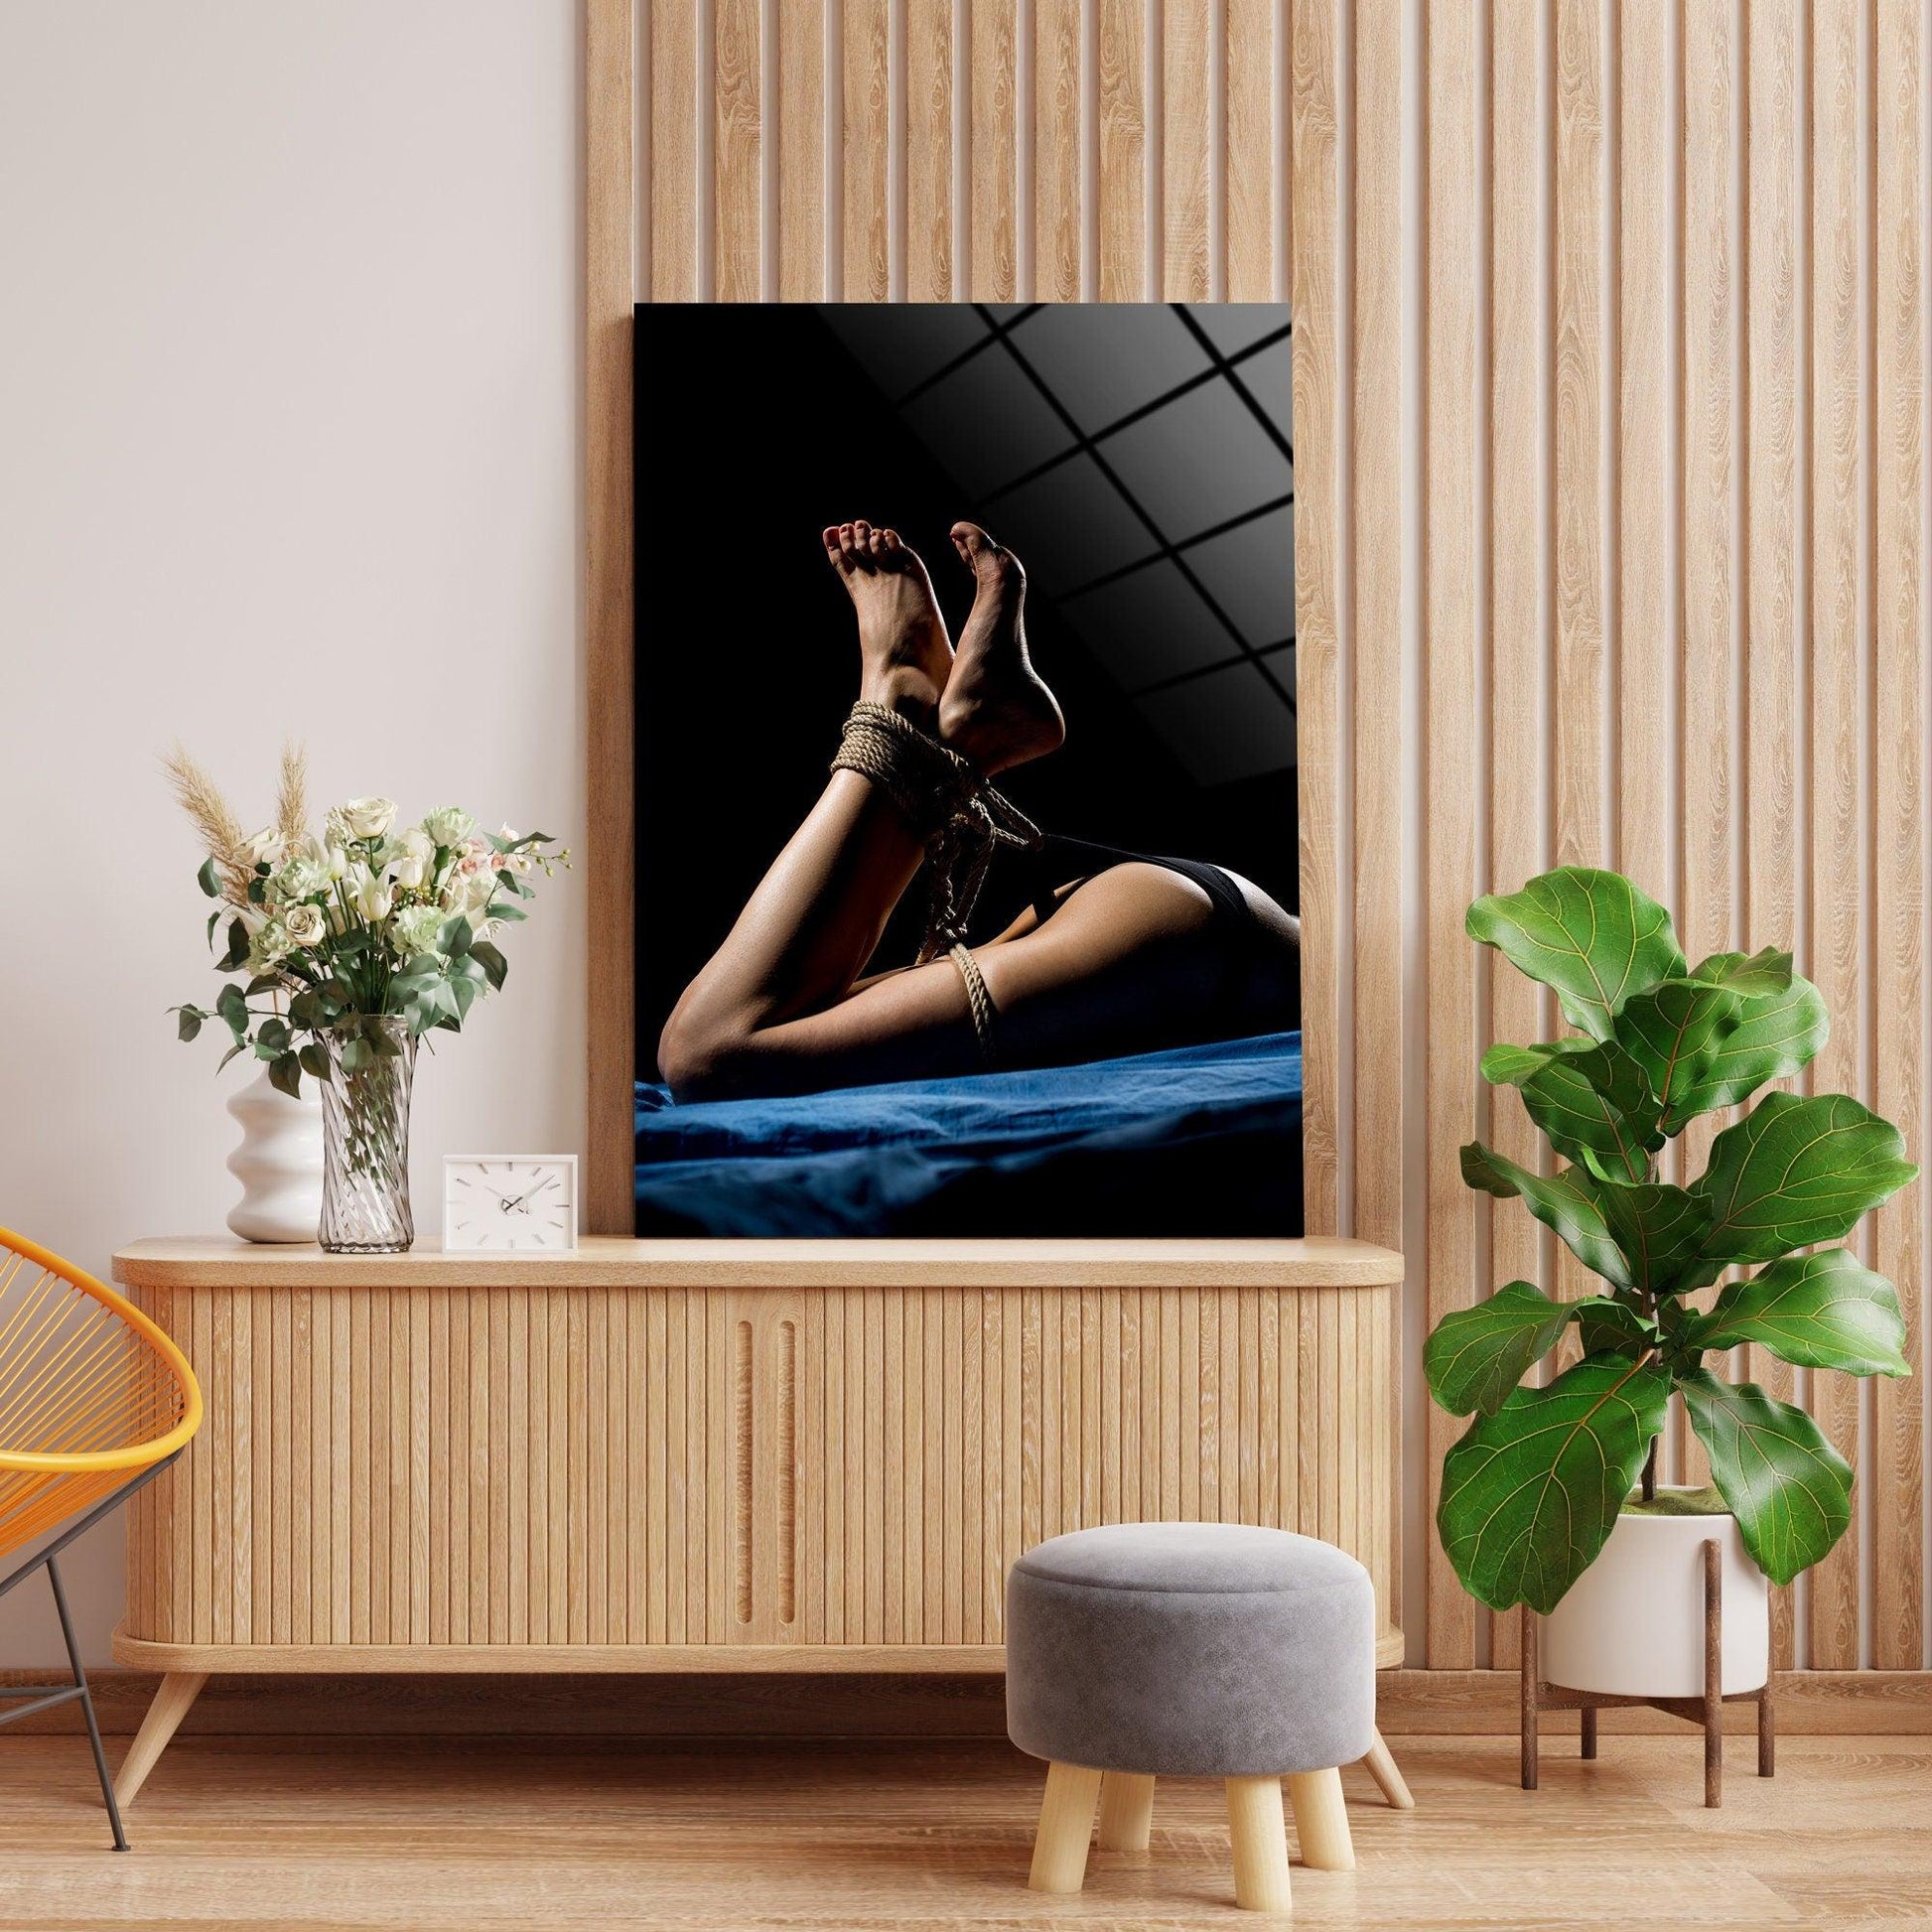 Shibari Nude girl glass wall art| Fetish wall decor, Sexy artwork, Silhouette girl Wall Erotic décor Woman, Sensual art print, Naked artwork